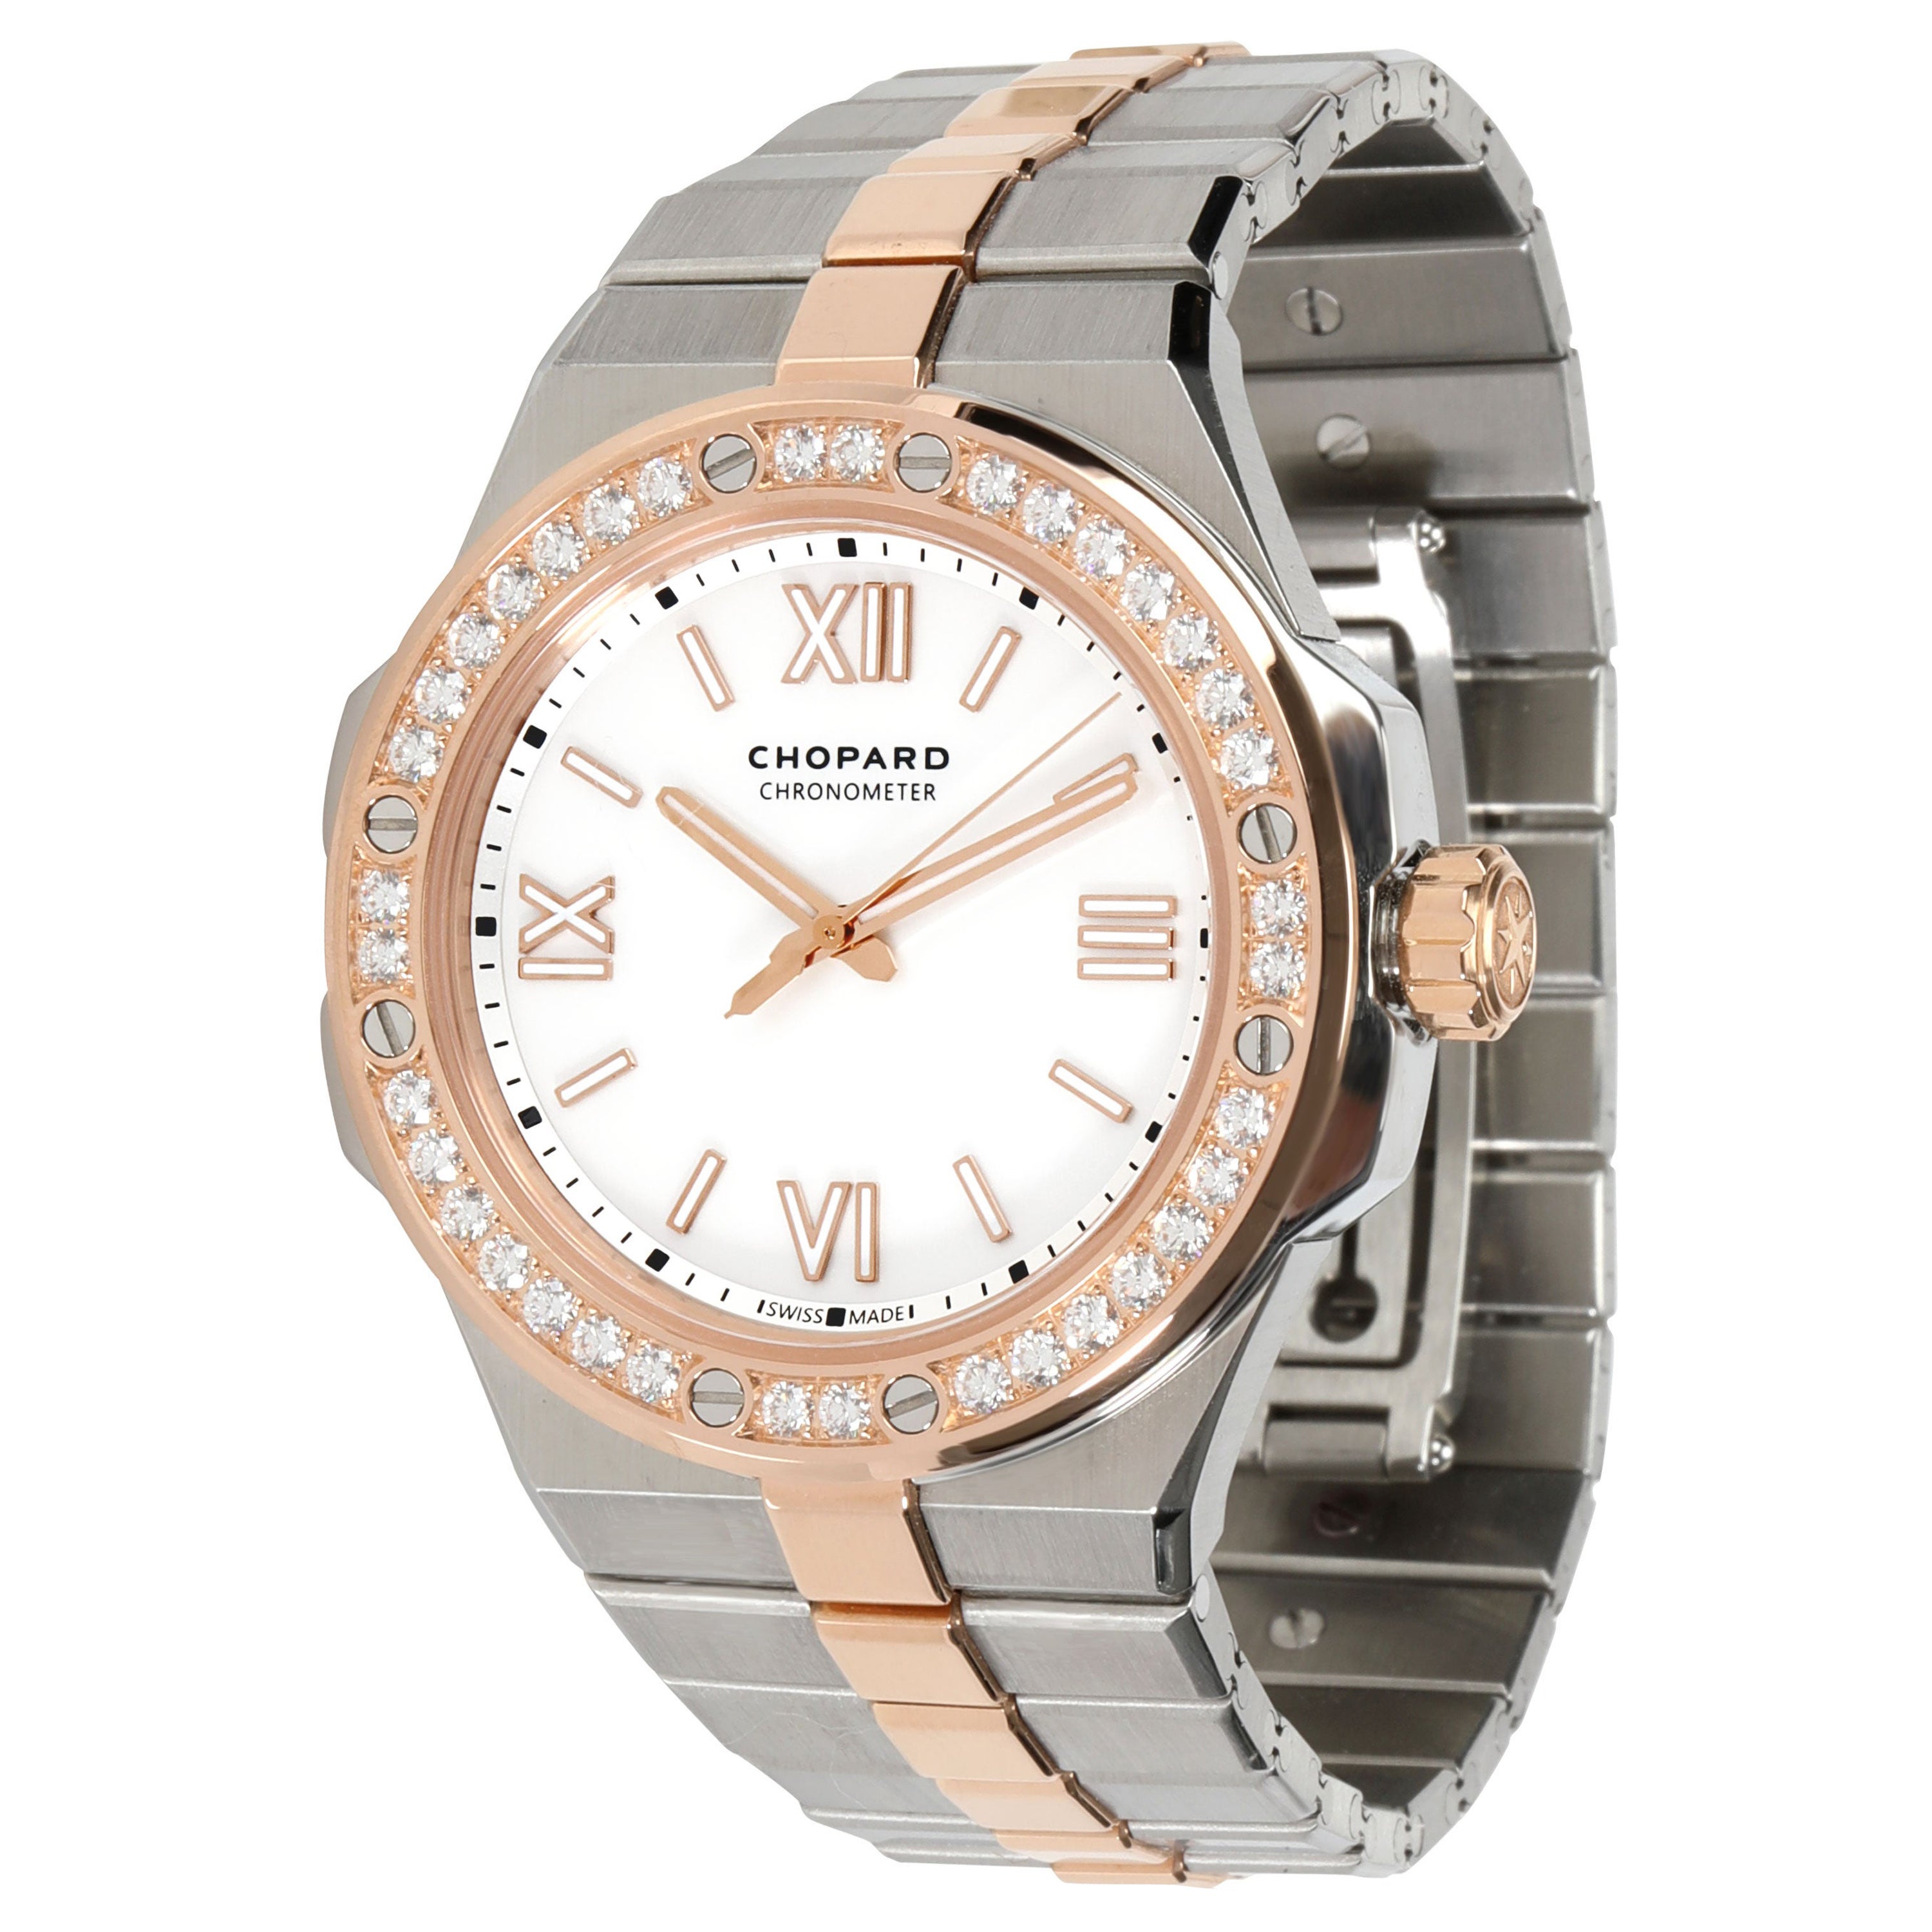 Chopard Alpine Eagle 298601-6002 Women's Watch in 18kt Stainless Steel/Rose Gold